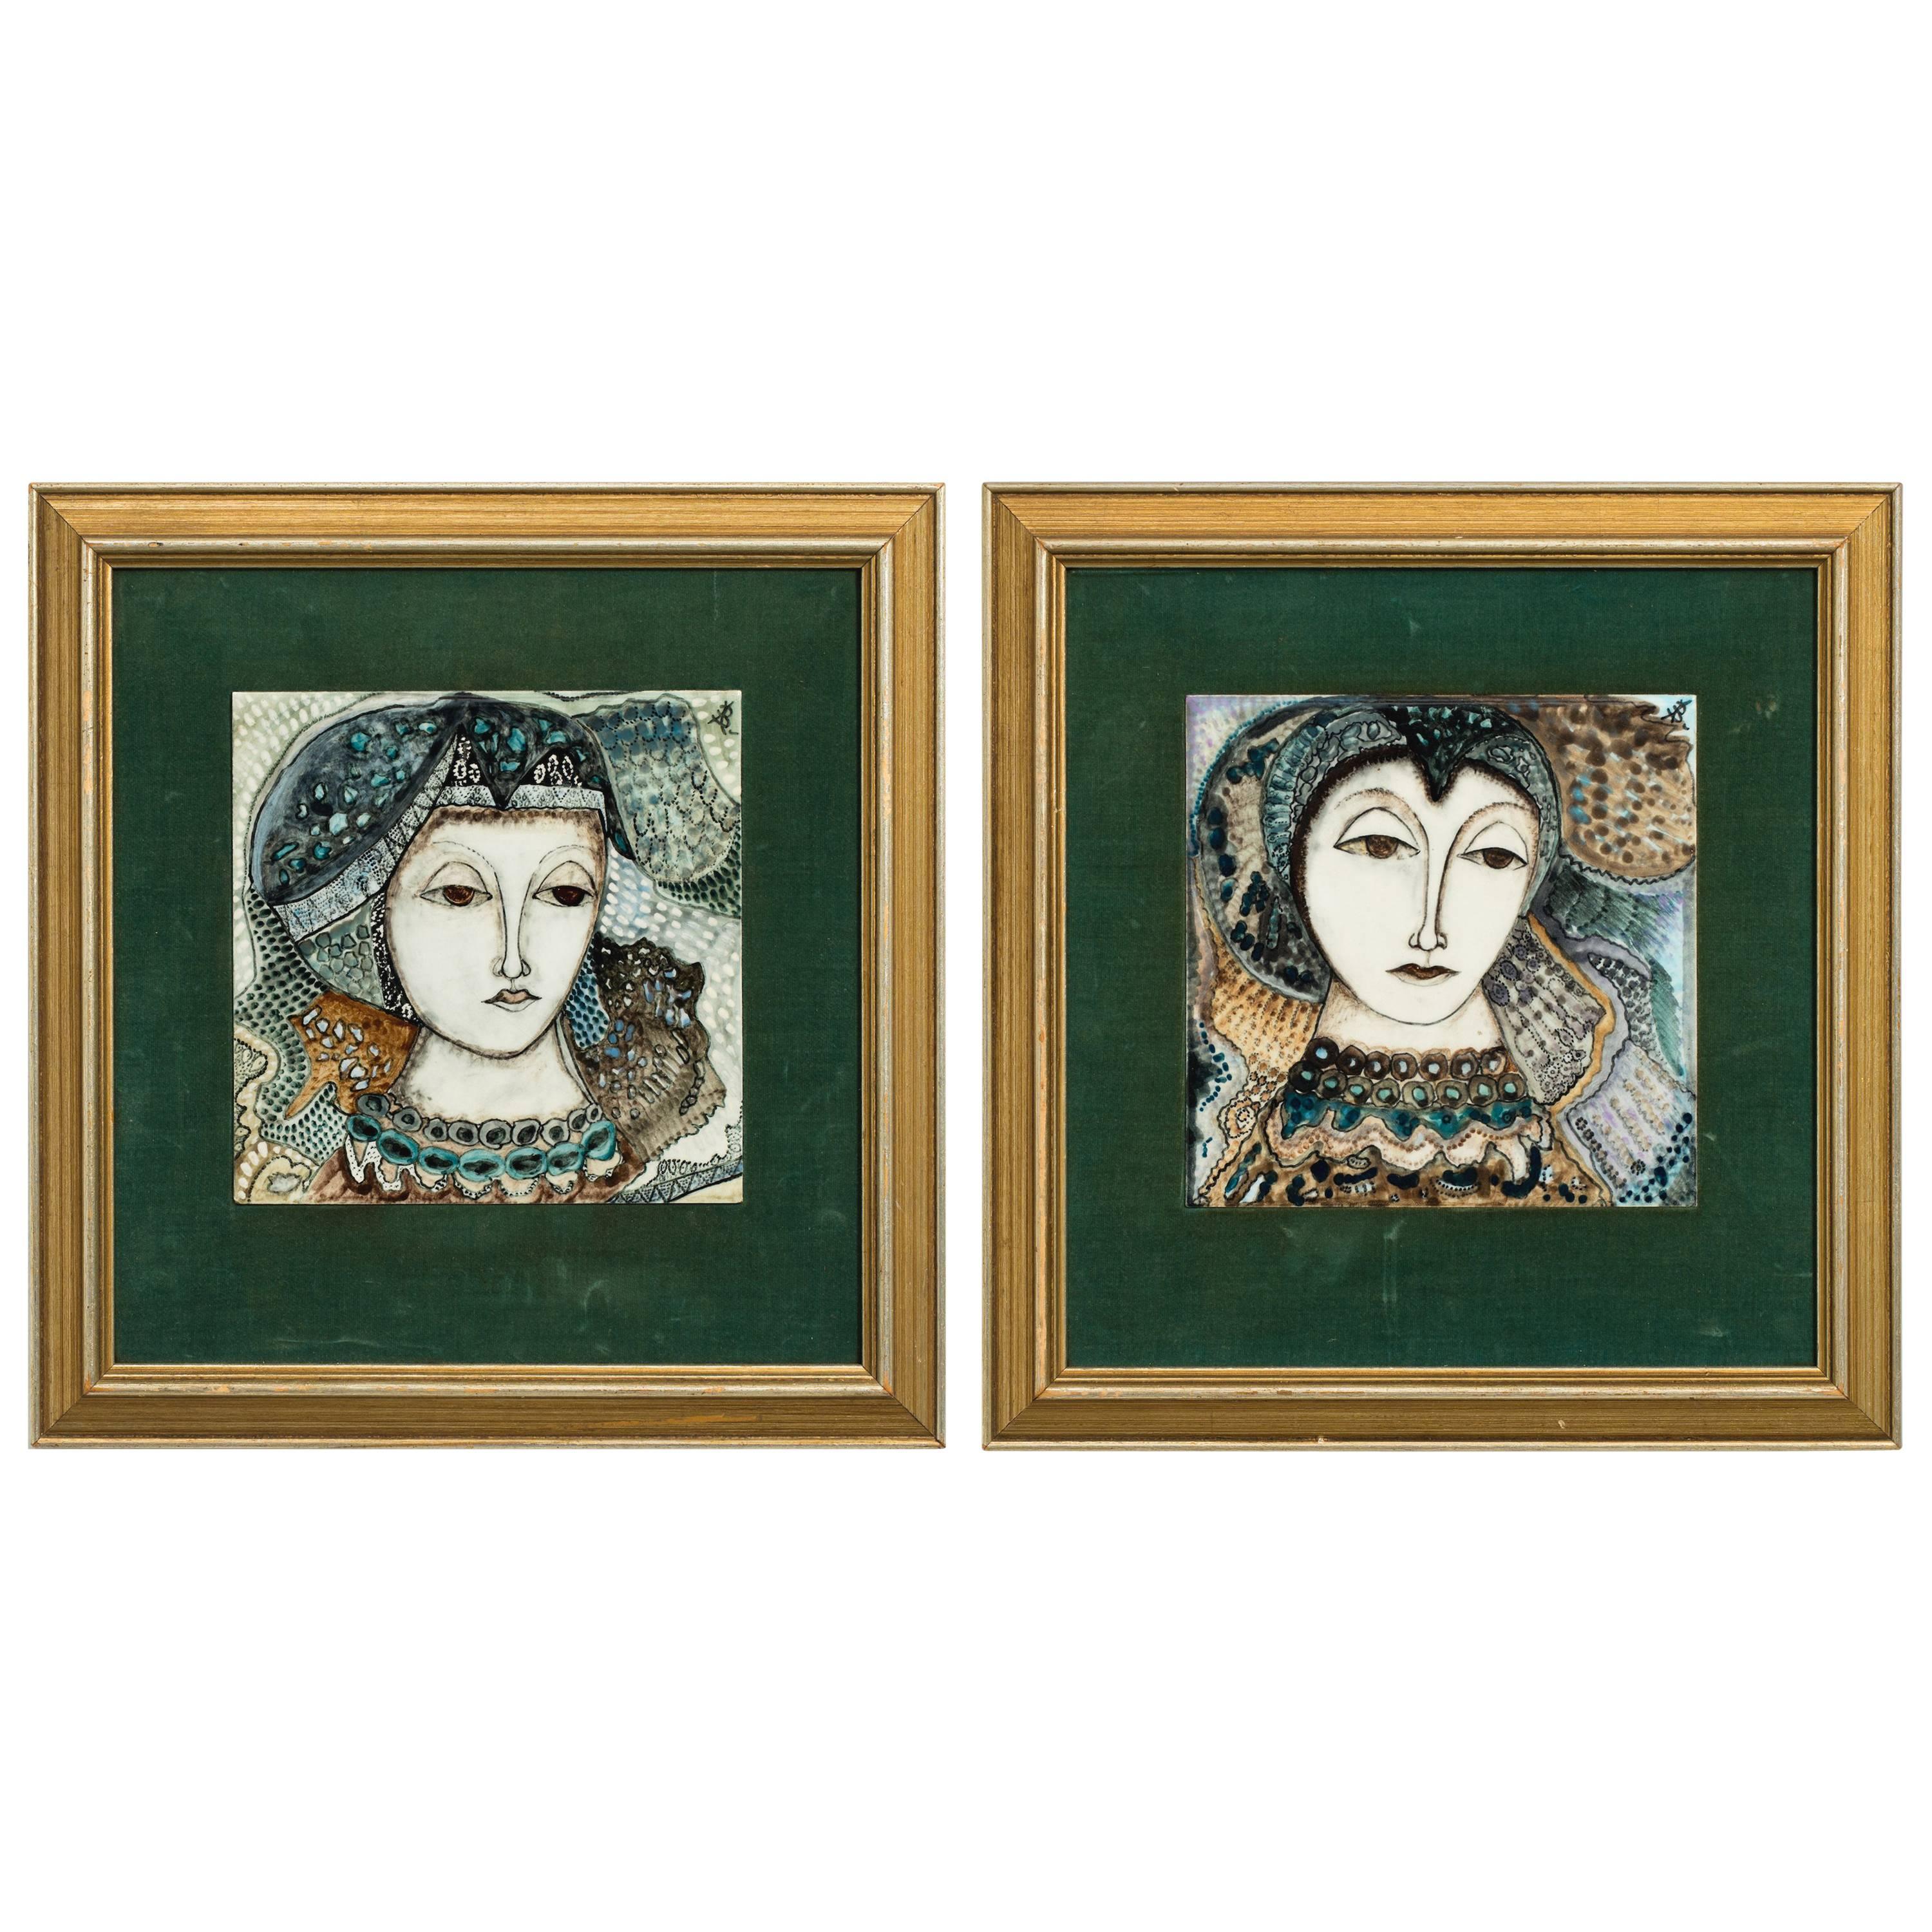 Pair of Italian Hand-Painted Framed Tiles